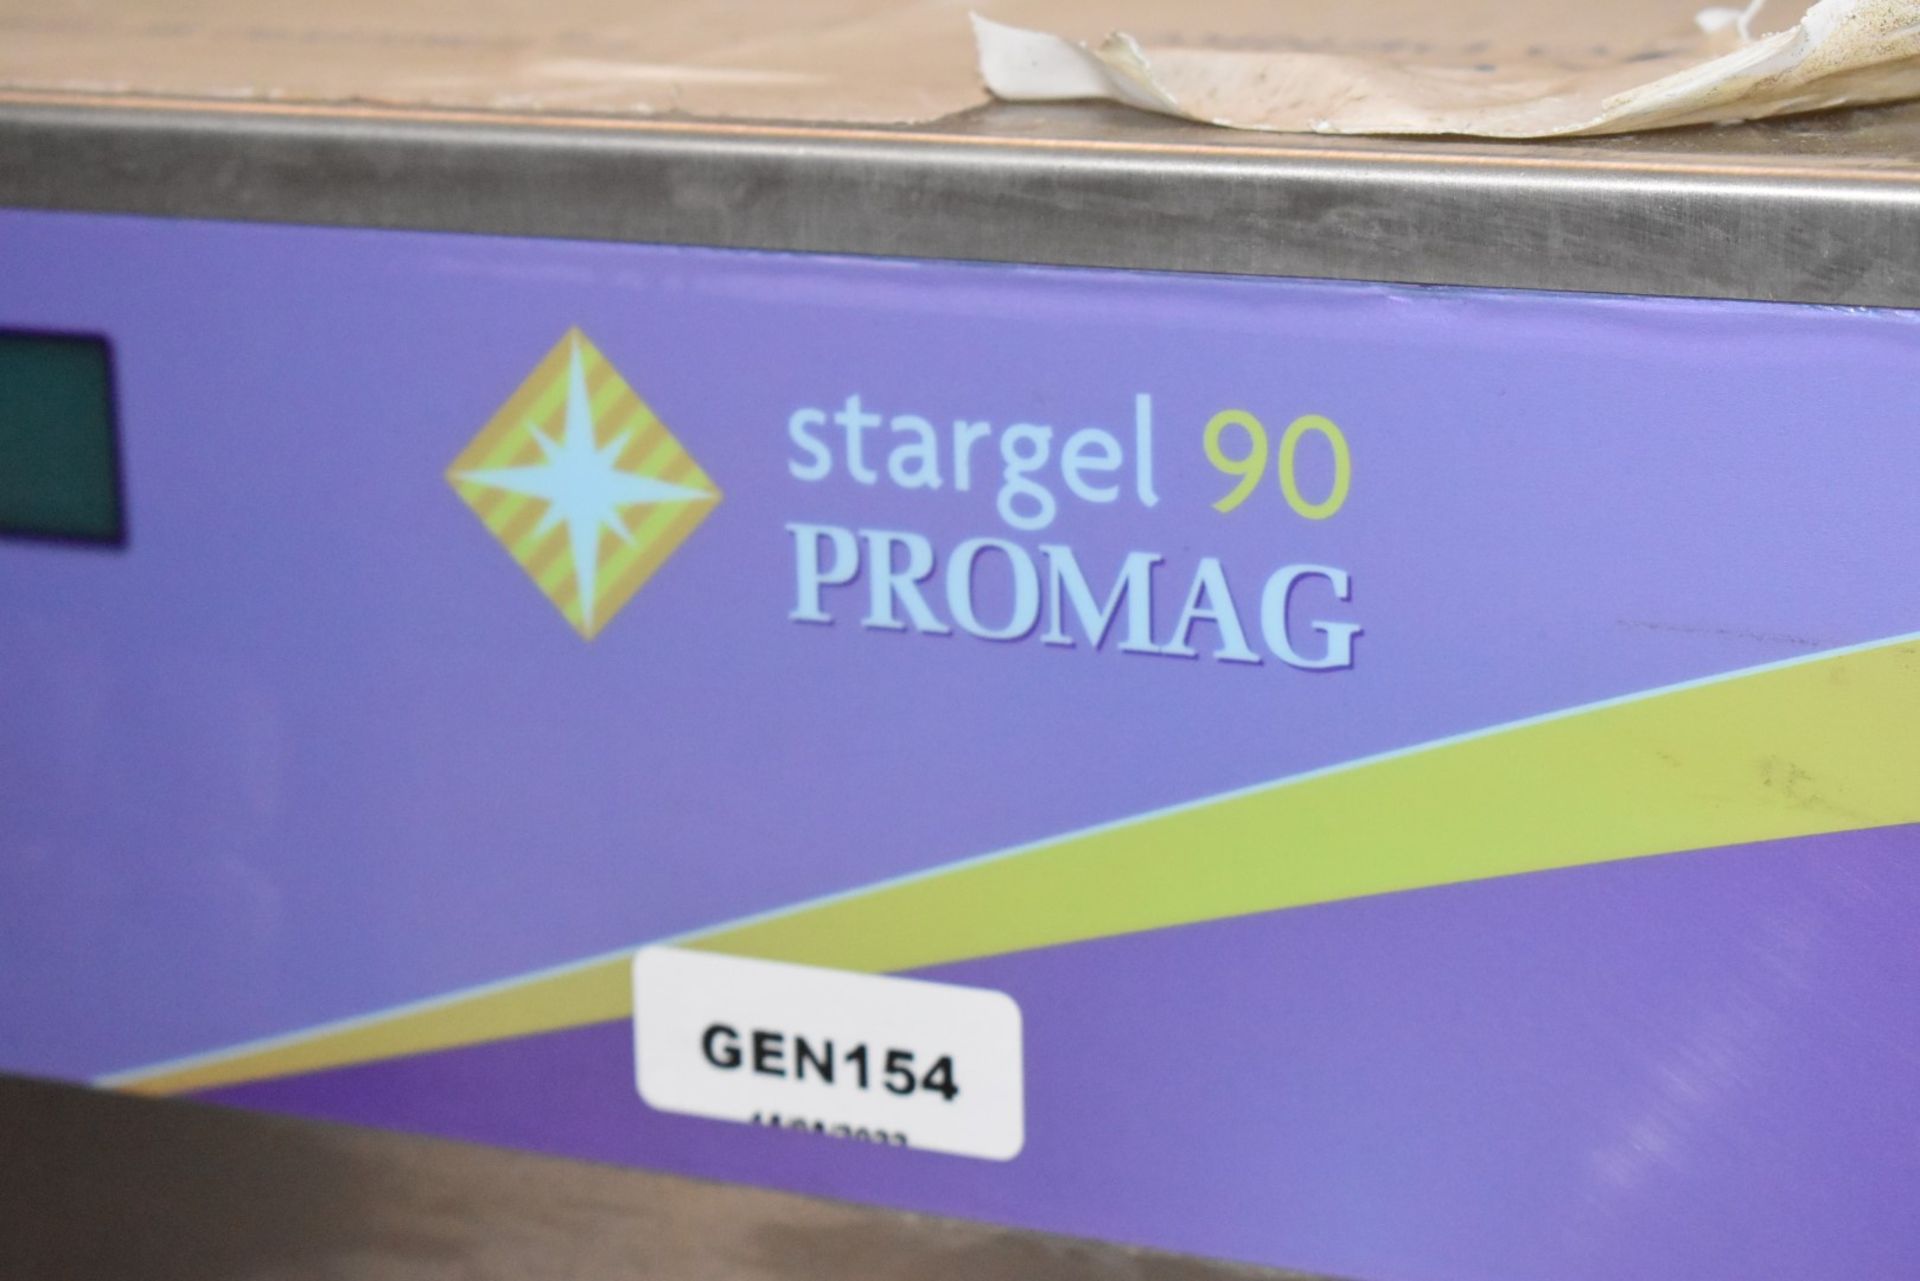 1 x Promag Stargel HF 90 Ice Cream Batch Freezer - Image 5 of 11